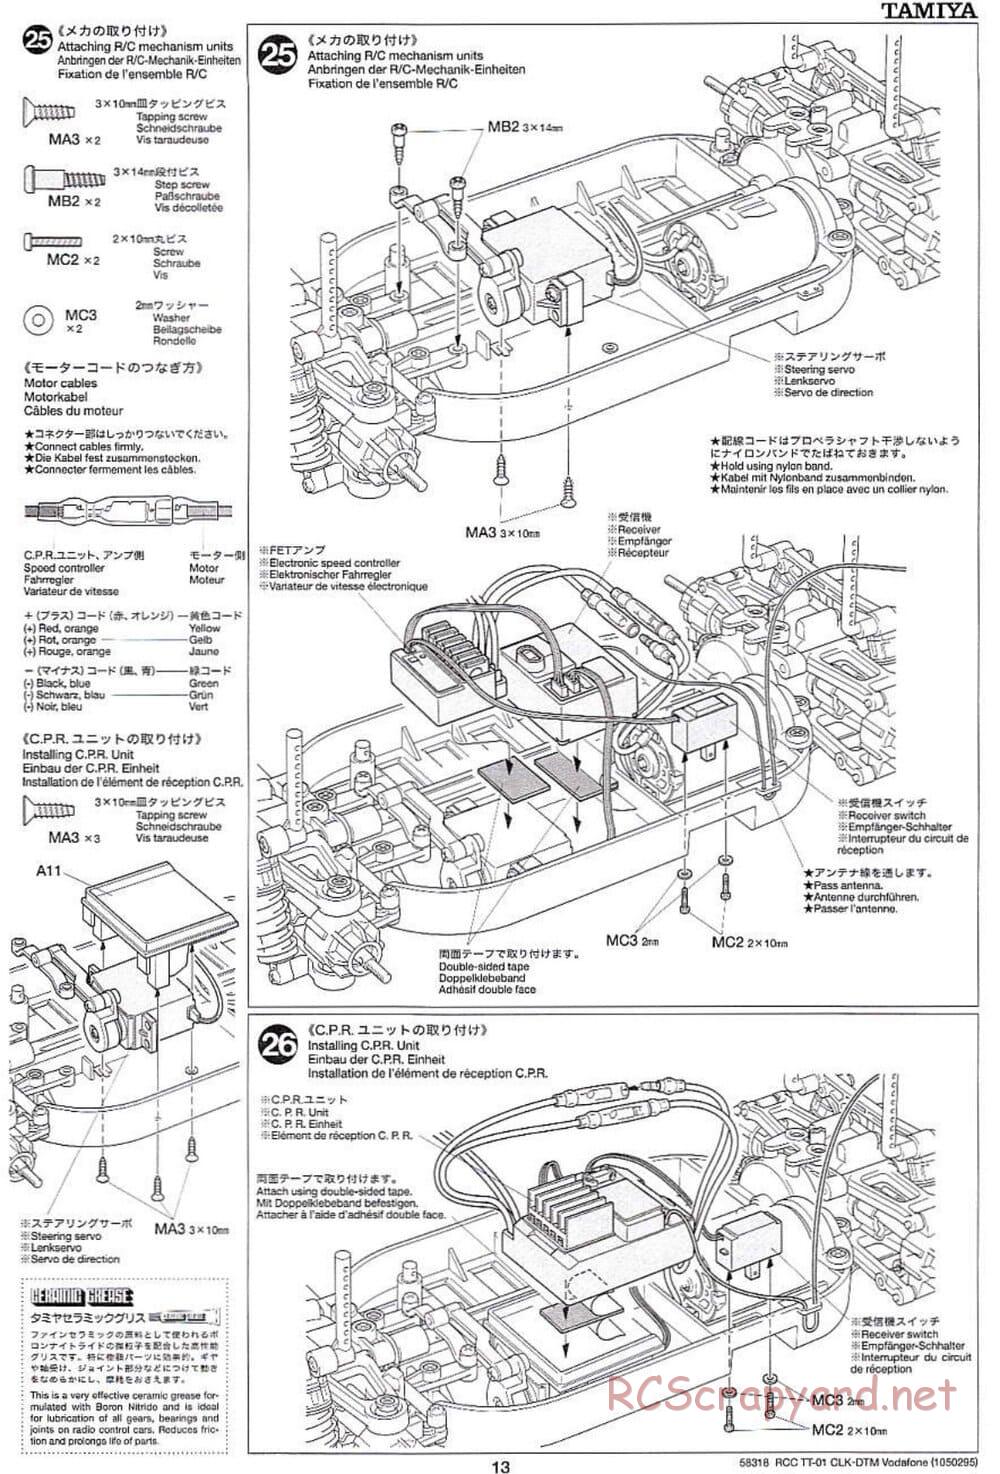 Tamiya - Mercedes-Benz CLK-DTM Team Vodafone AMG-Mercedes - TT-01 Chassis - Manual - Page 13